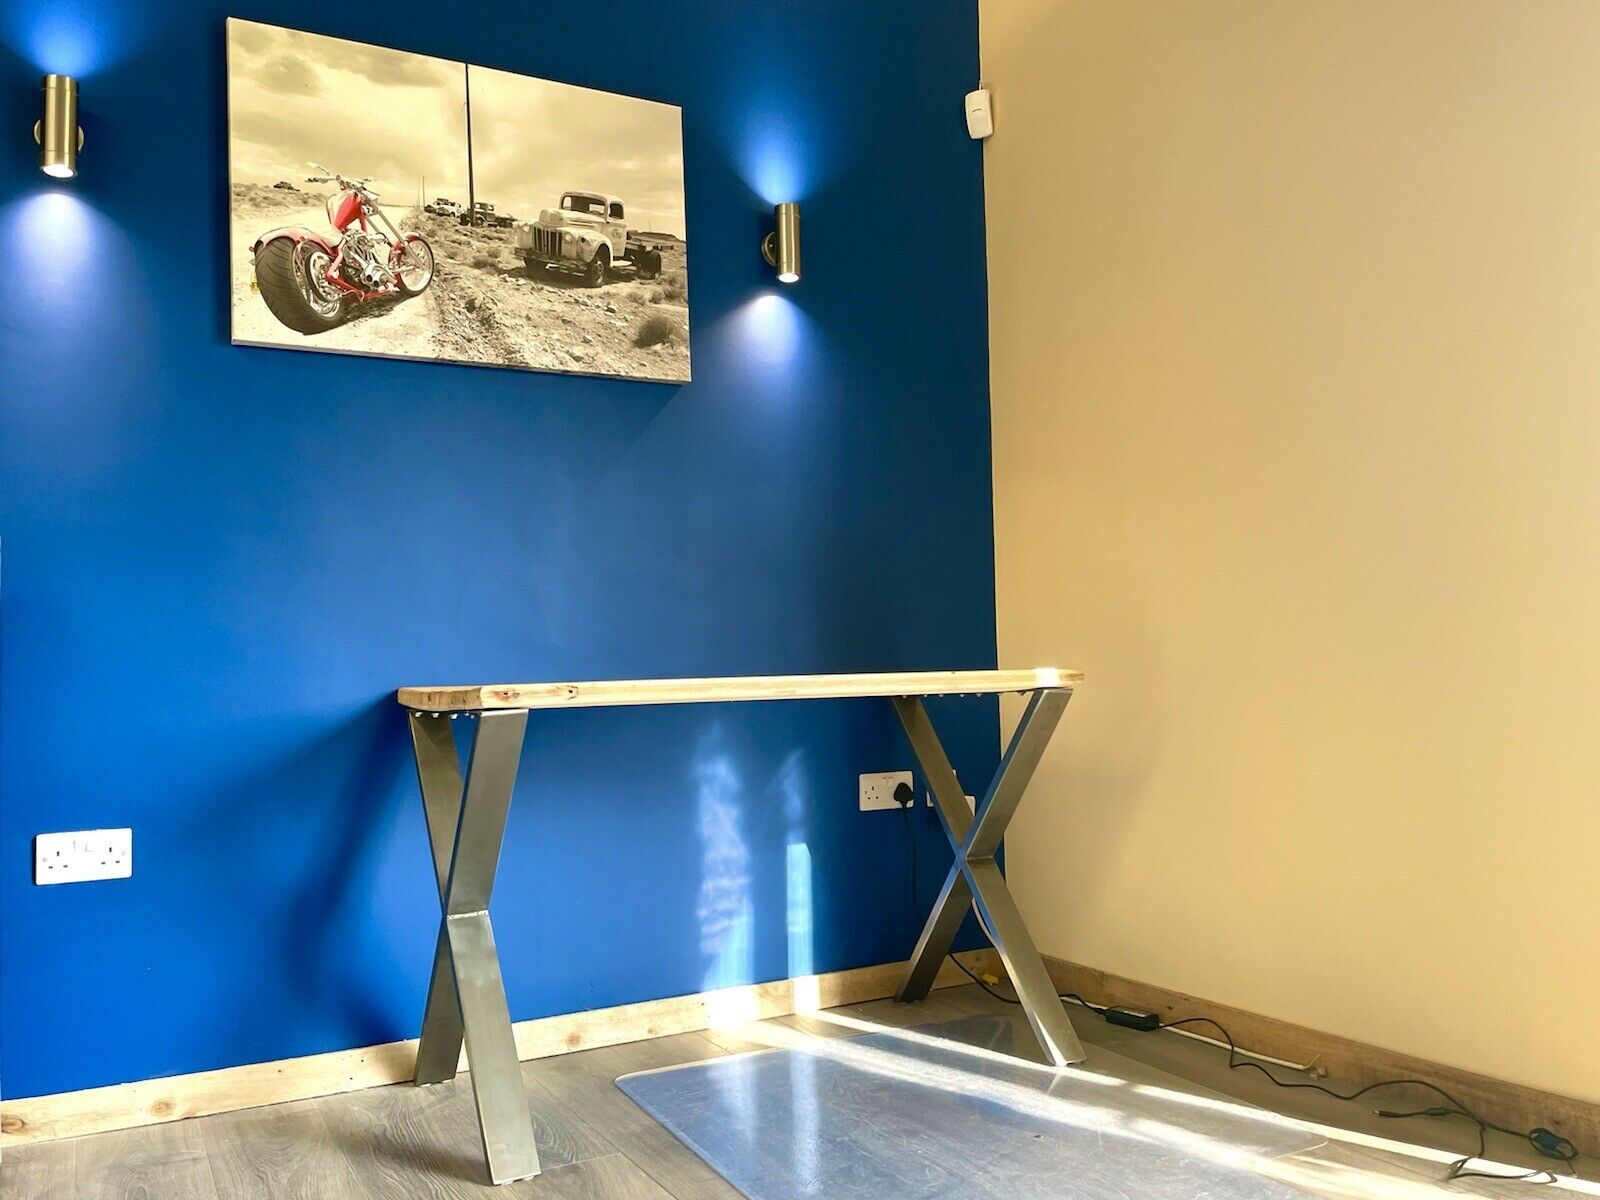 Rustic / Industrial, Handmade Plank Top Desk Upon Stainless Steel X Frame Legs